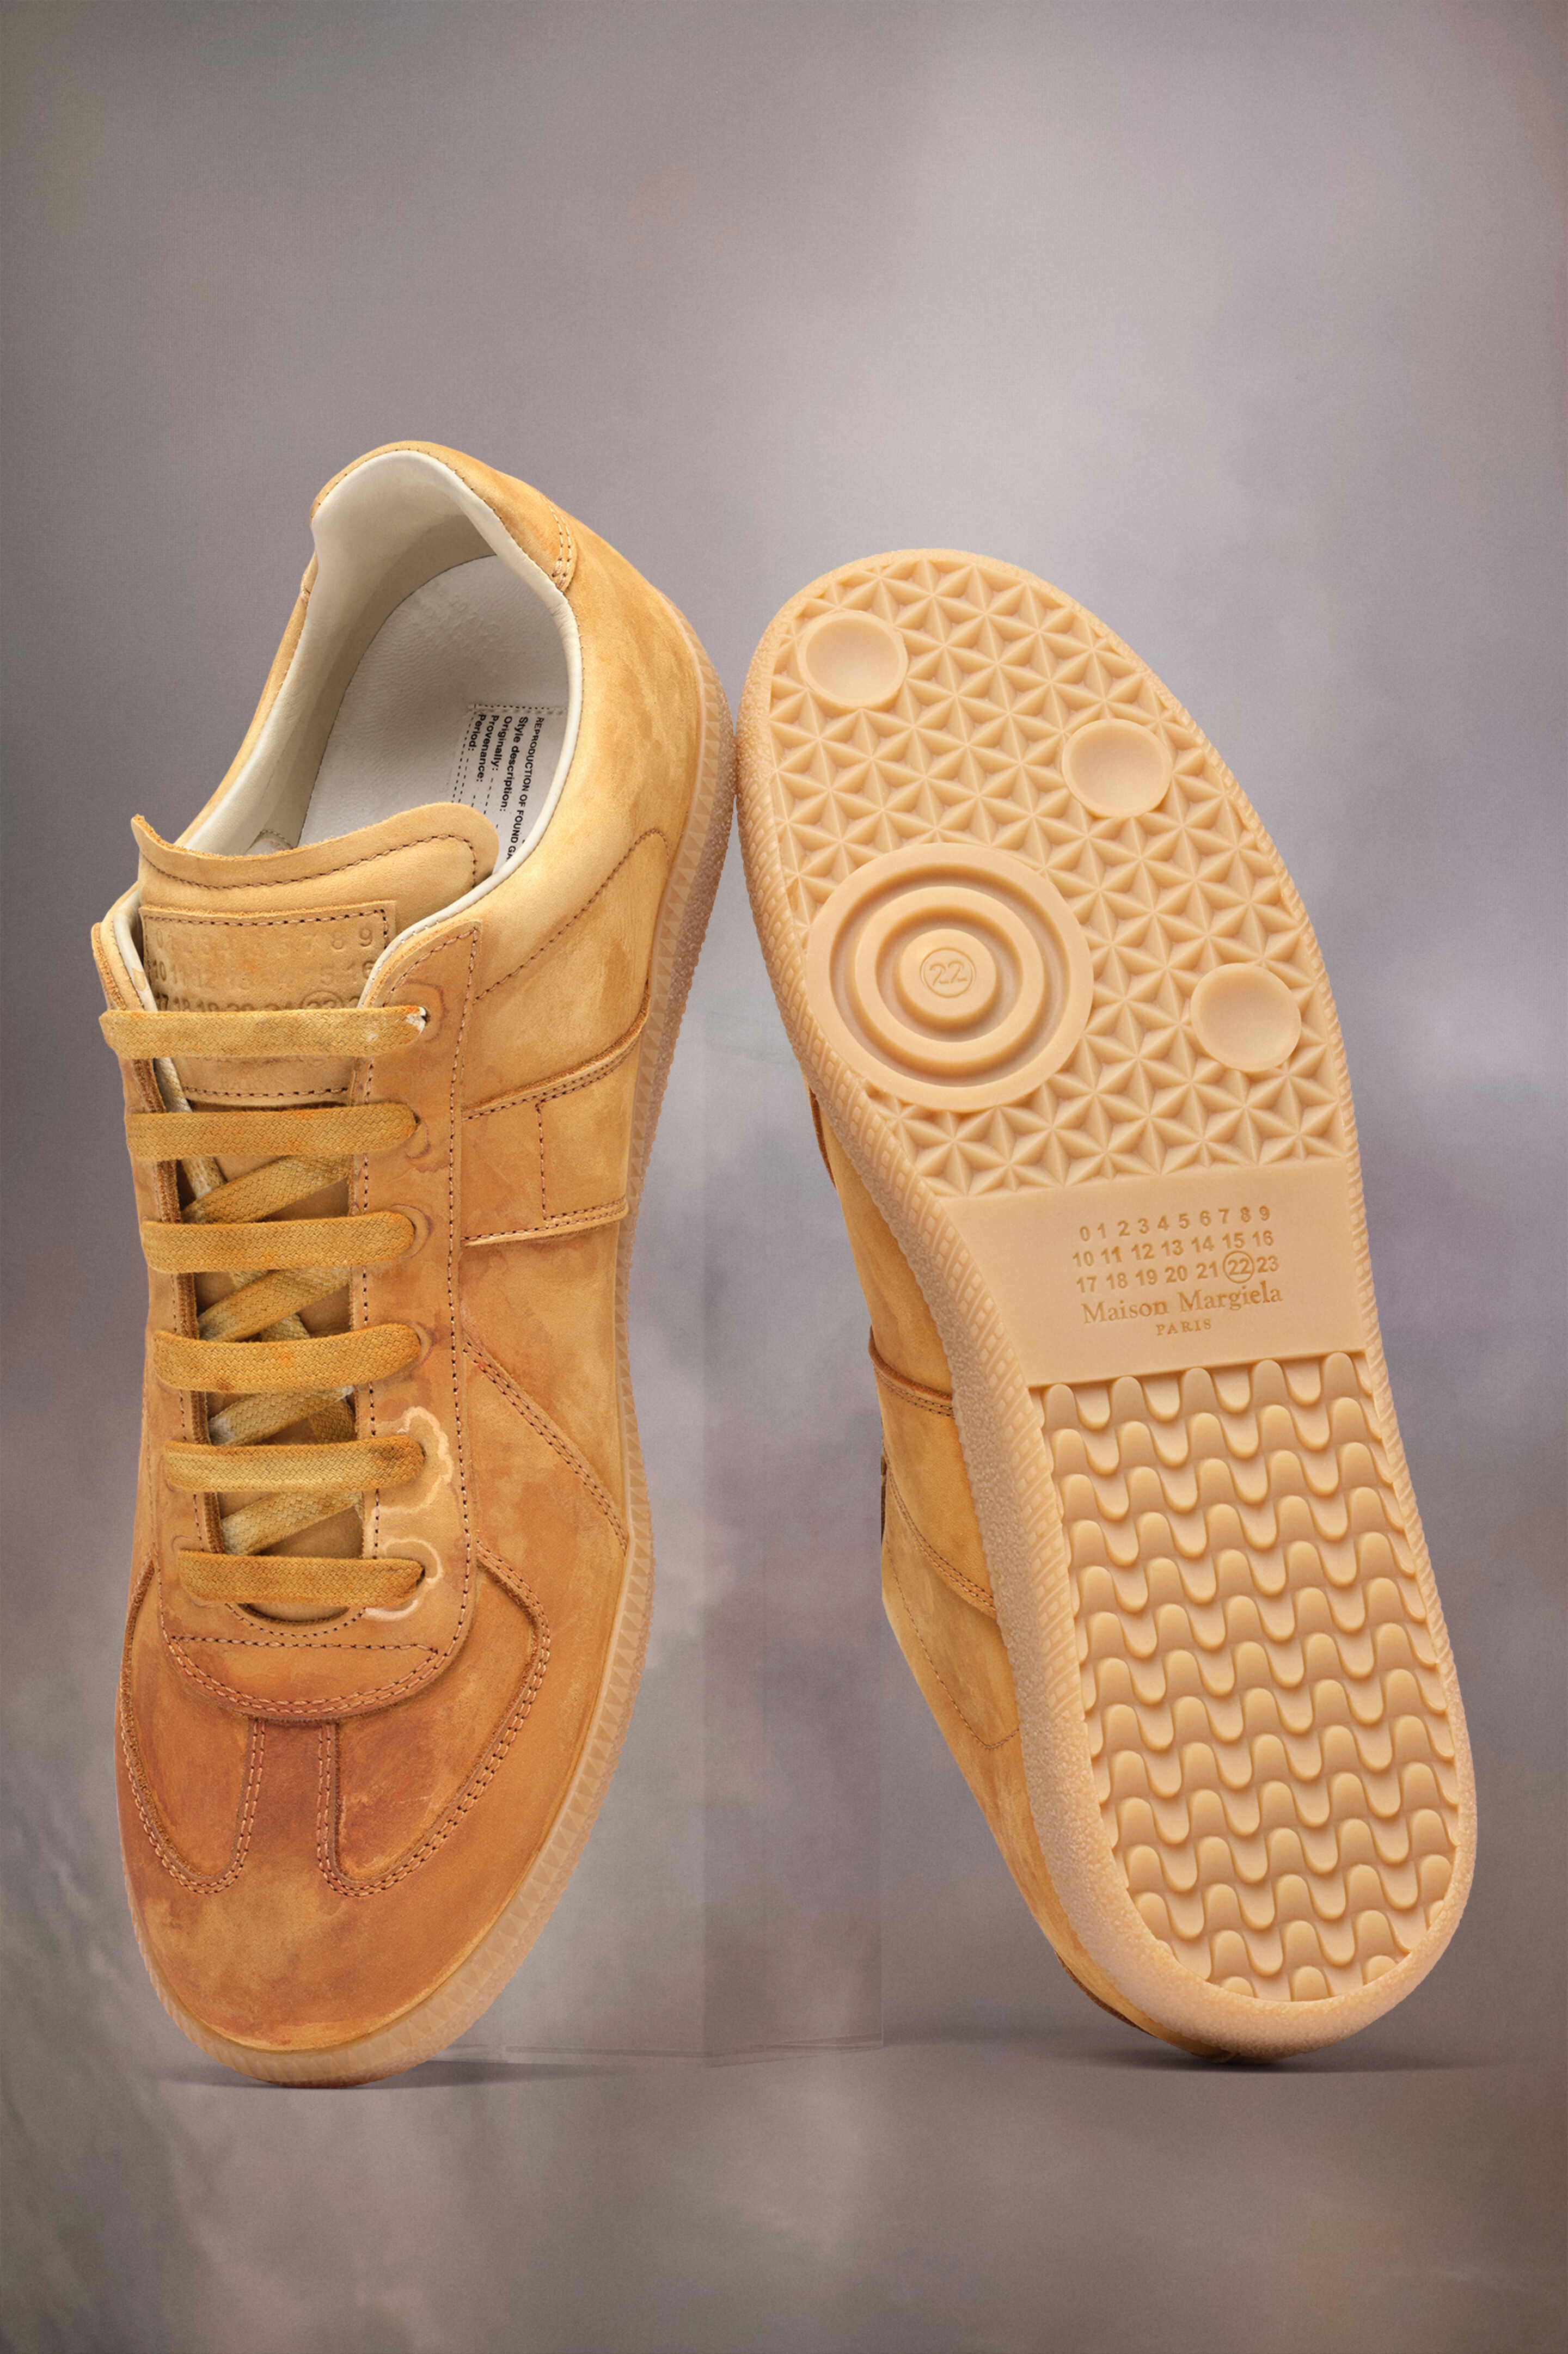 Artist Recicla Replica sneakers - 2